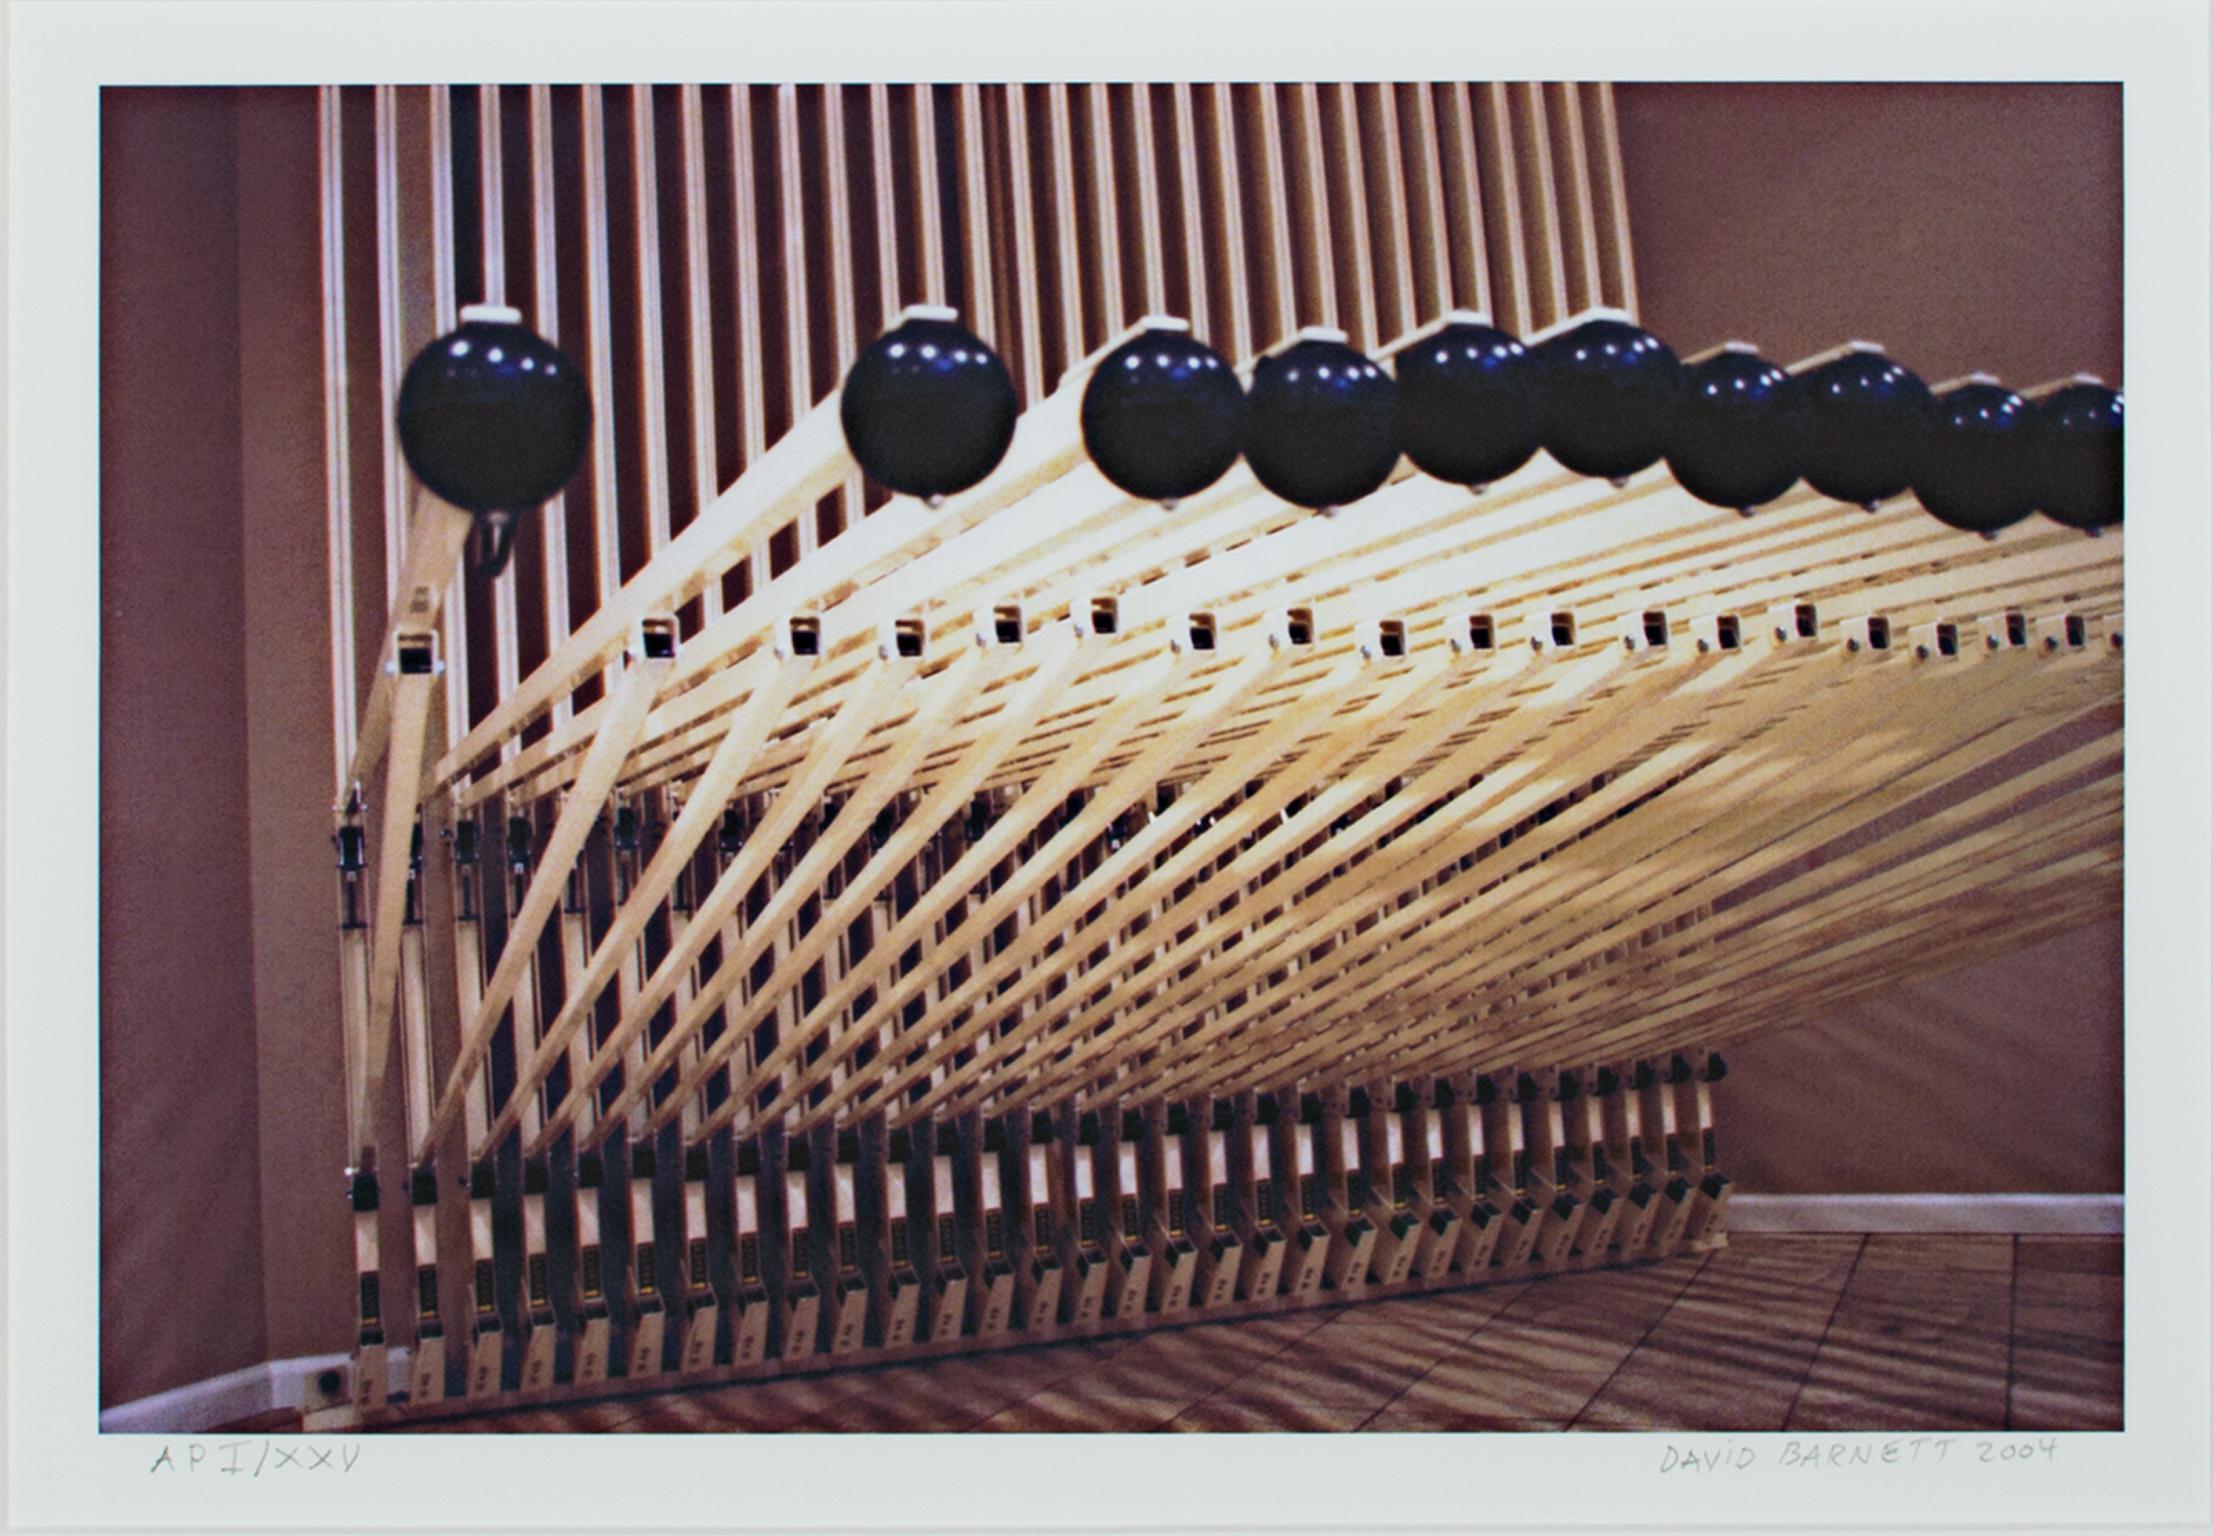 ""Steinhafel's Musical Syncopated Rug Rack Sculpture" - Photographie de David Barnett